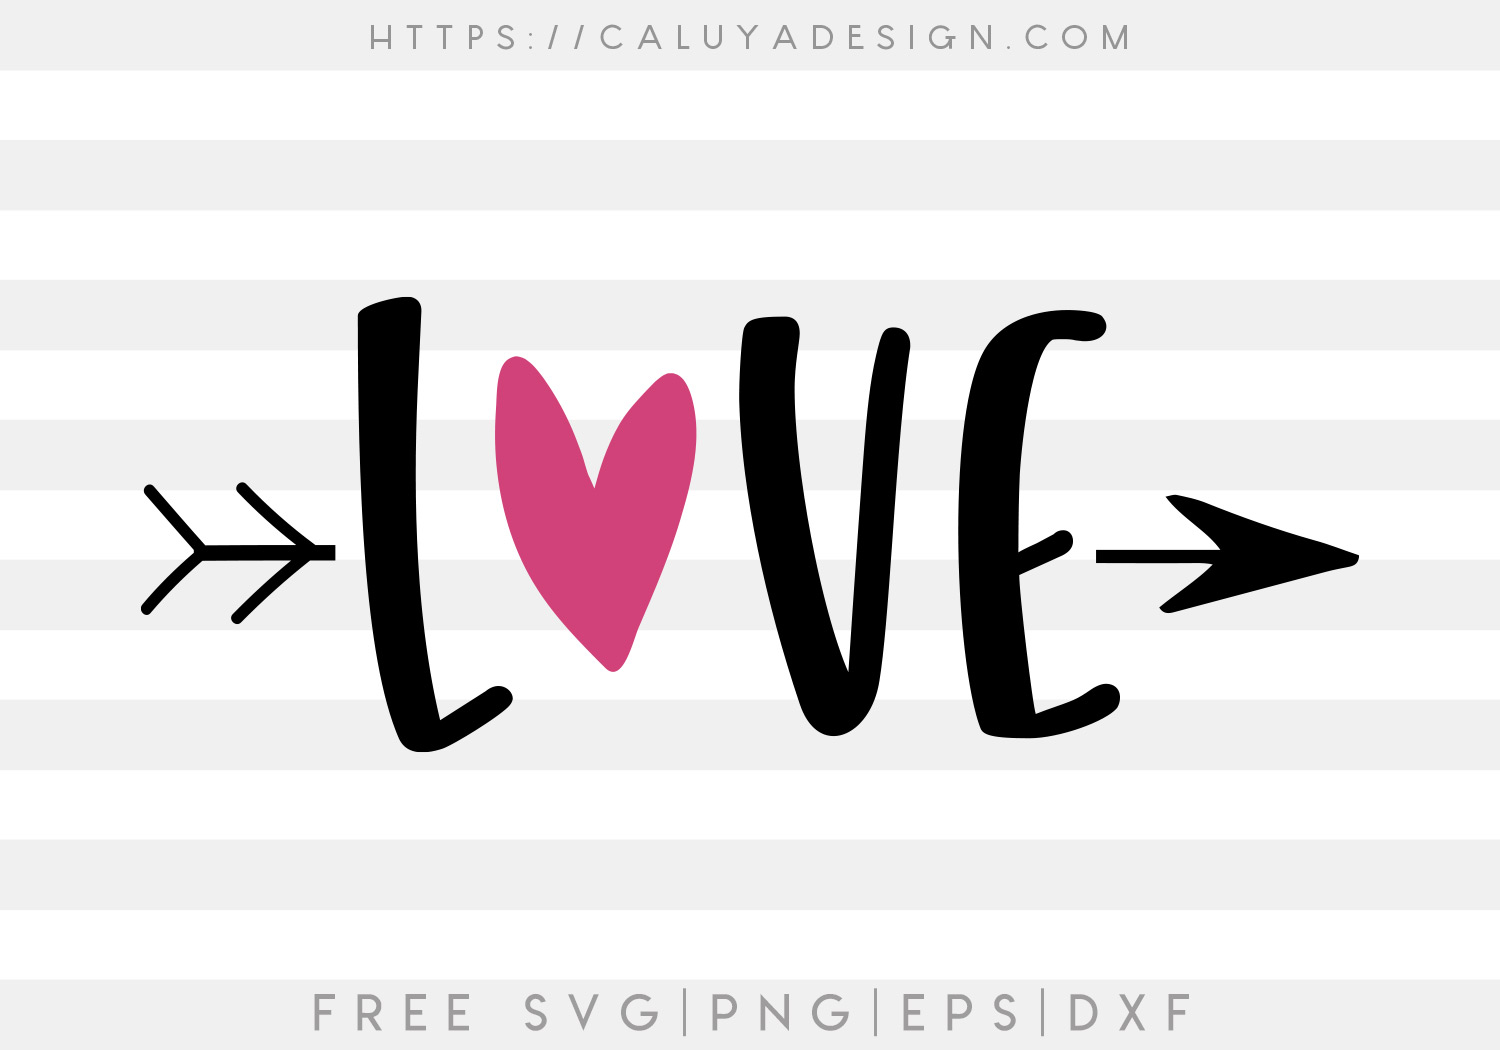 Download Free Love Svg Png Eps Dxf By Caluya Design SVG, PNG, EPS, DXF File